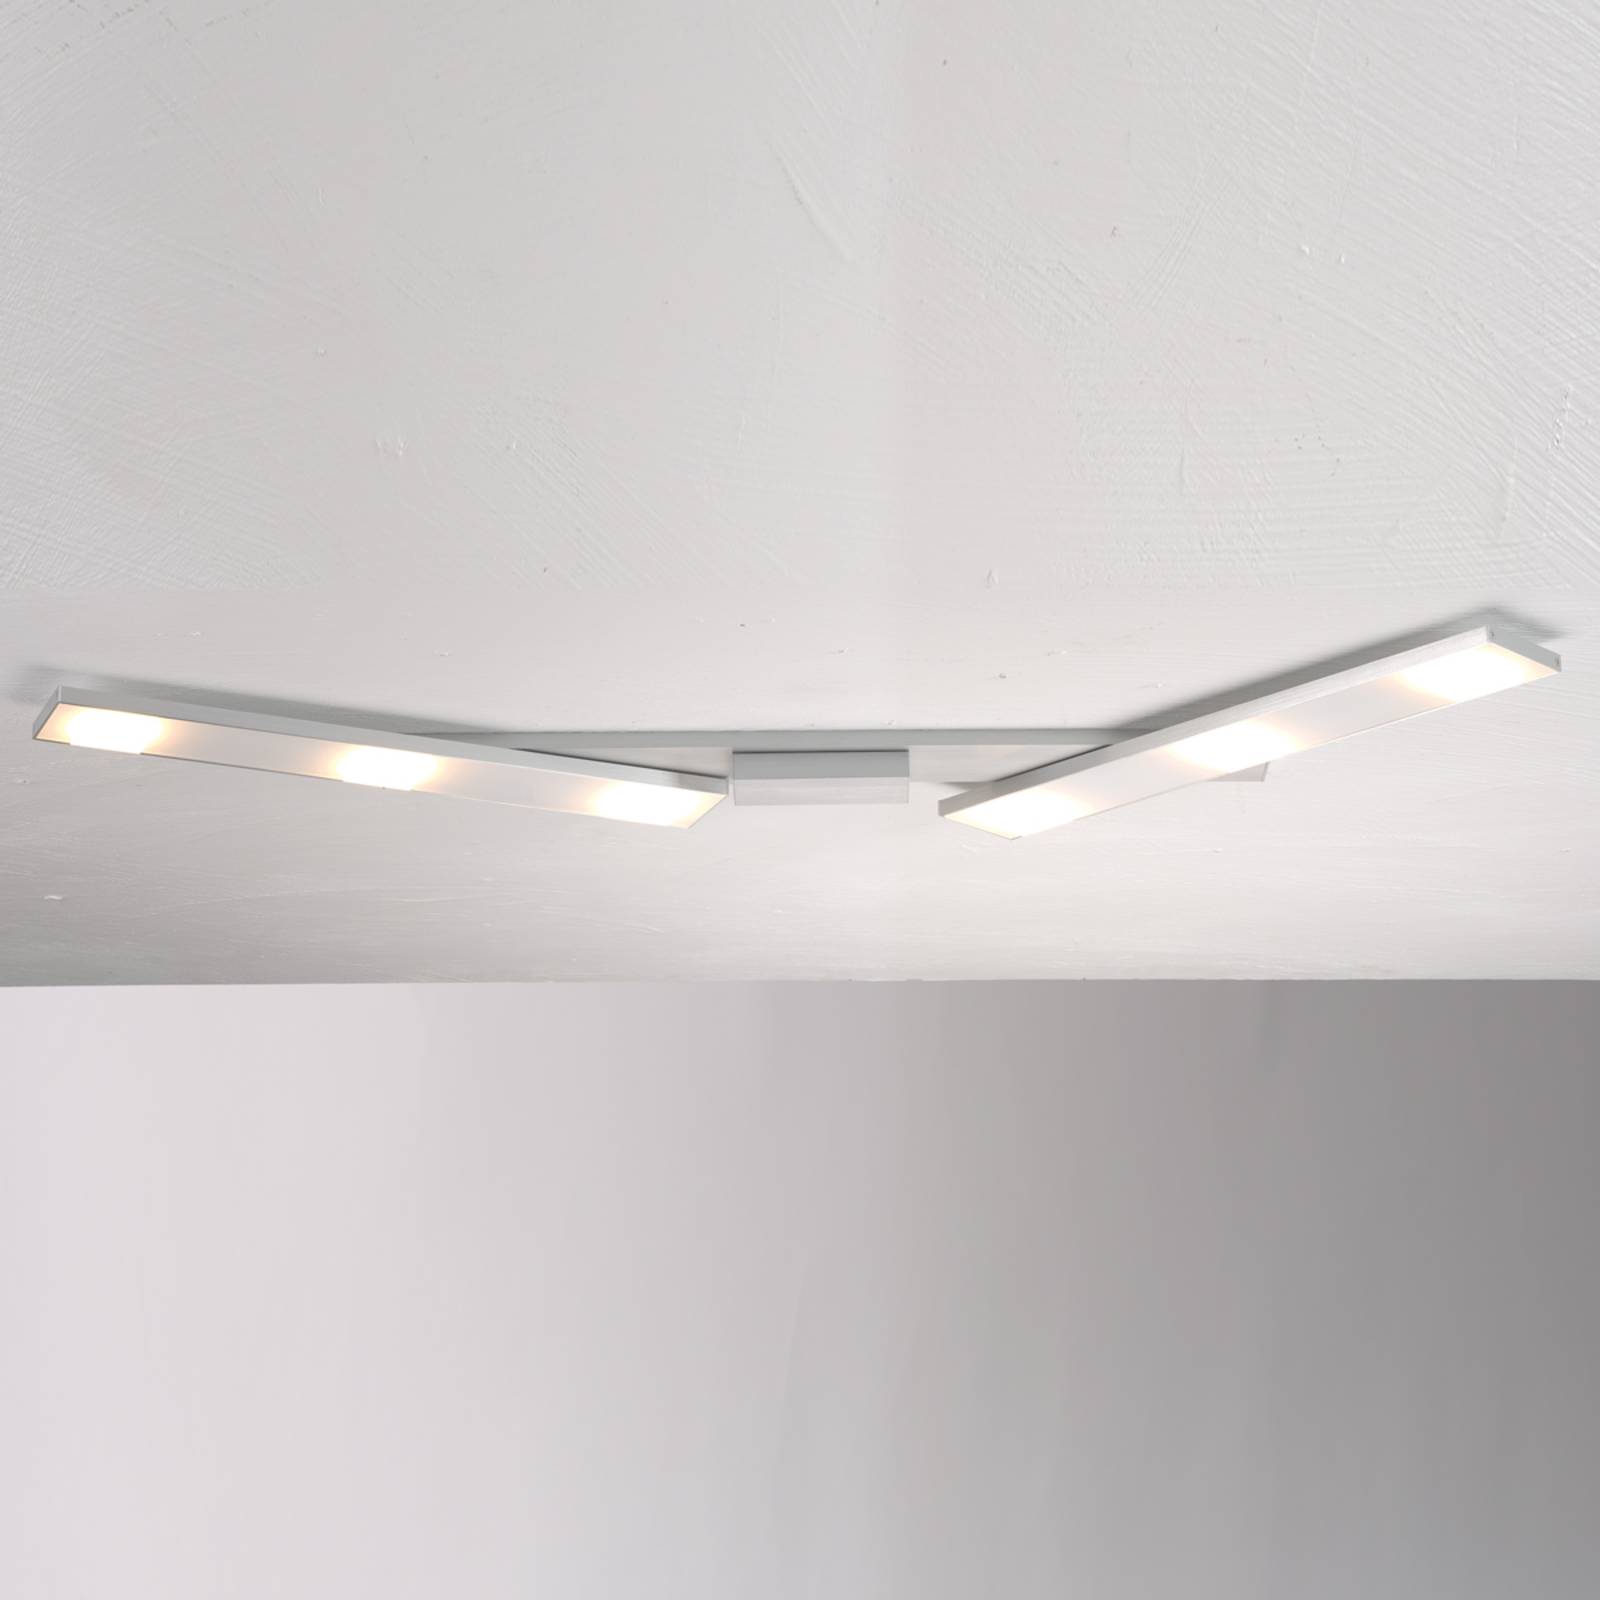 Odchylana lampa sufitowa LED Slight, aluminiowa